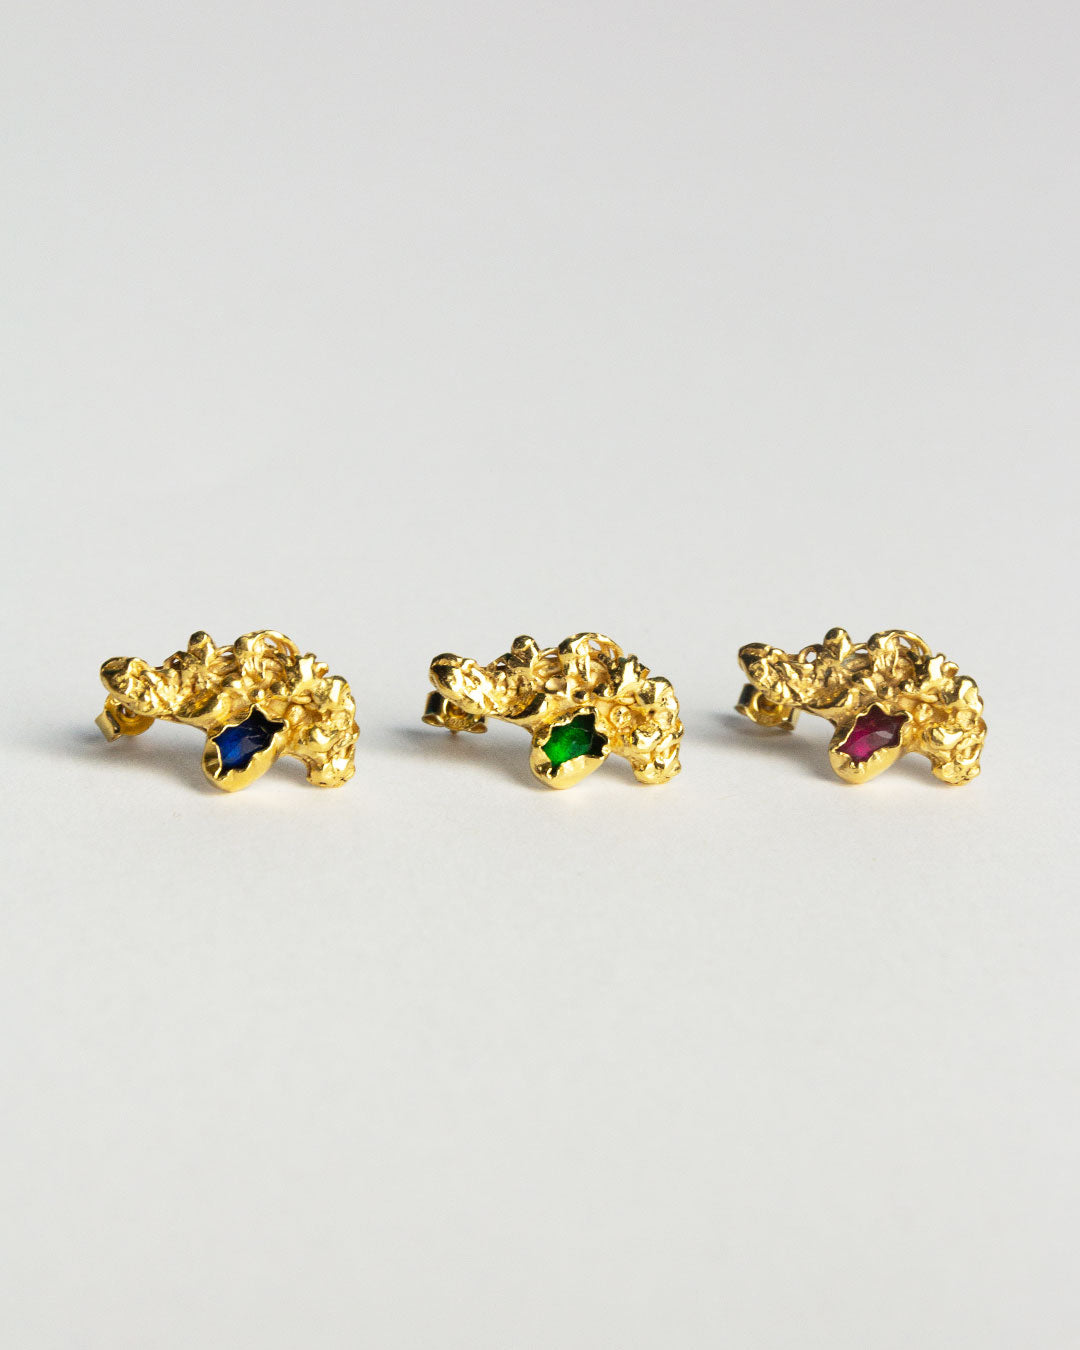 Melibea Short Earrings - Joana Pestana Jewellery